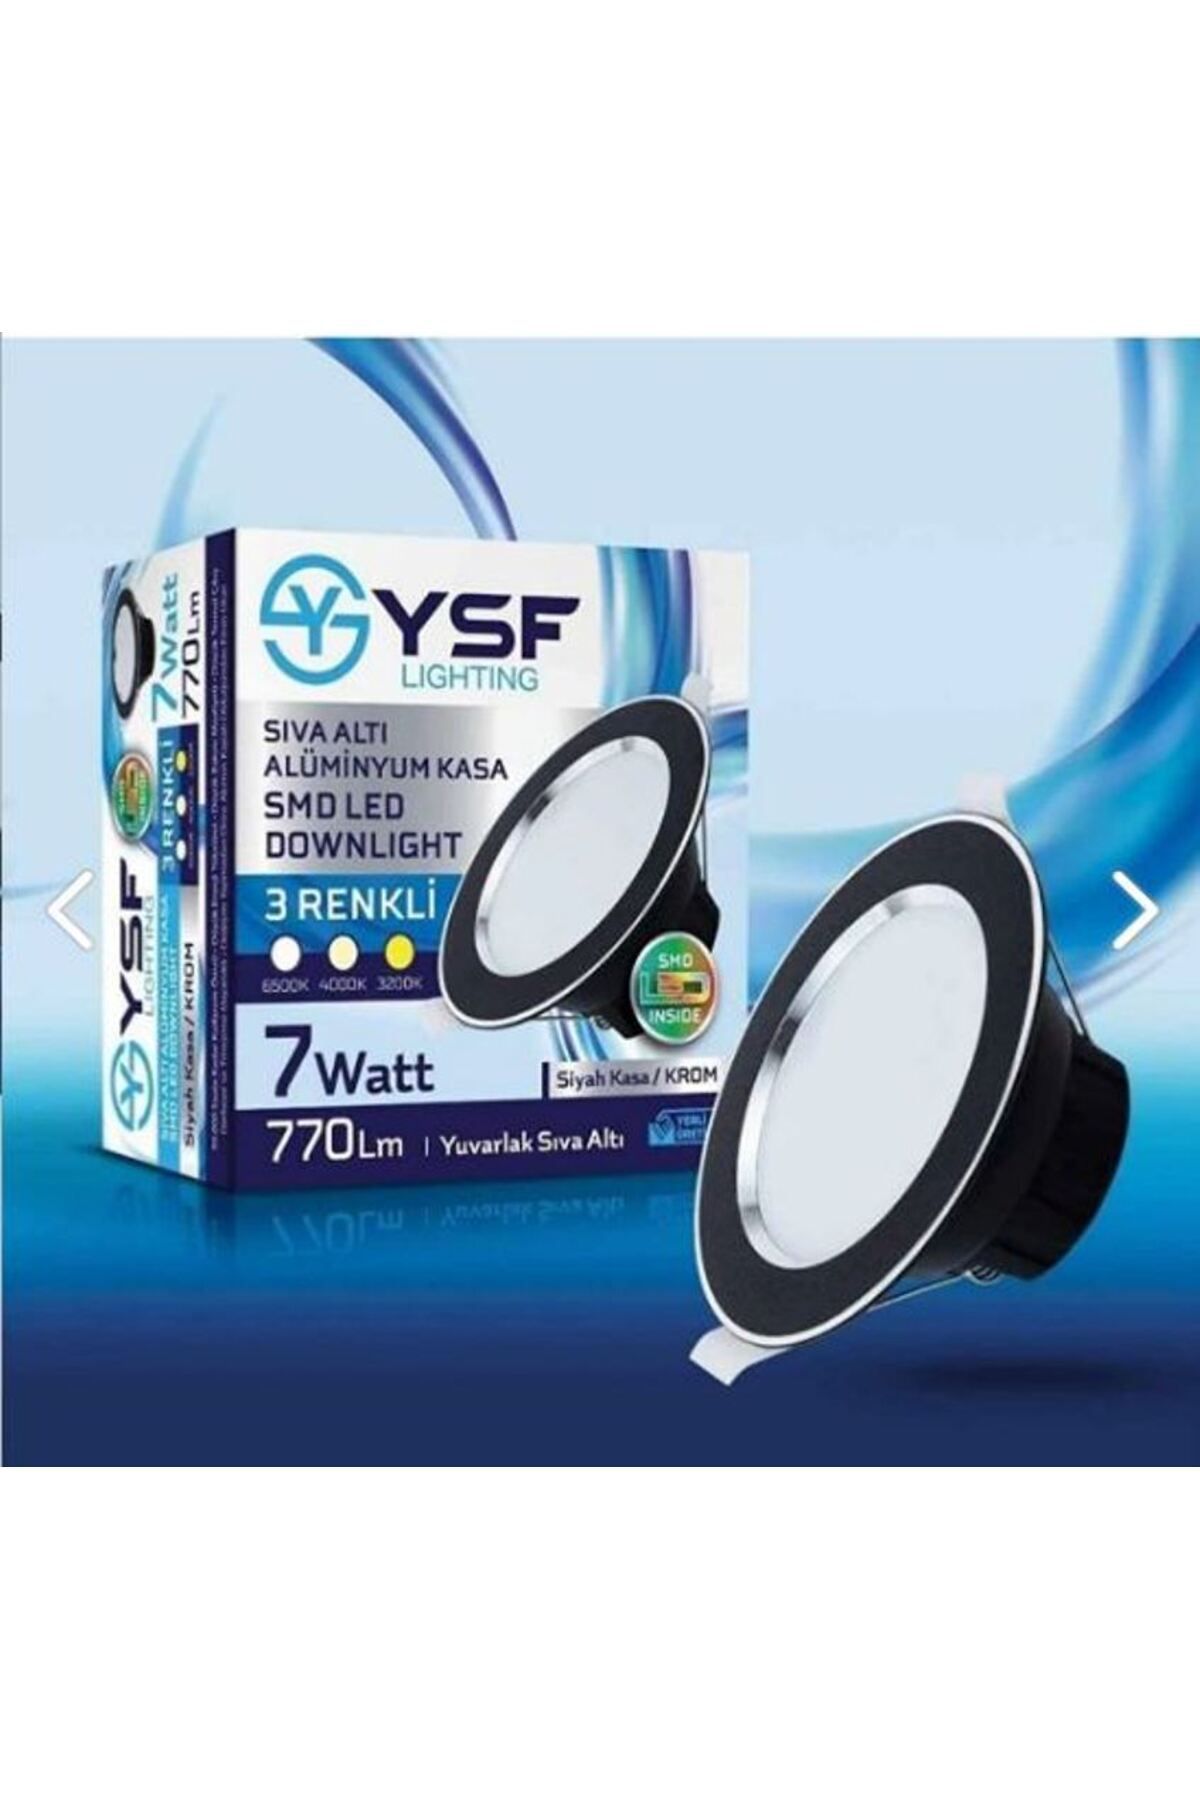 YSF Lighting Siyah Kasa Sıva Altı Alüminyum Kasa 7 watt 3 Renkli Spot